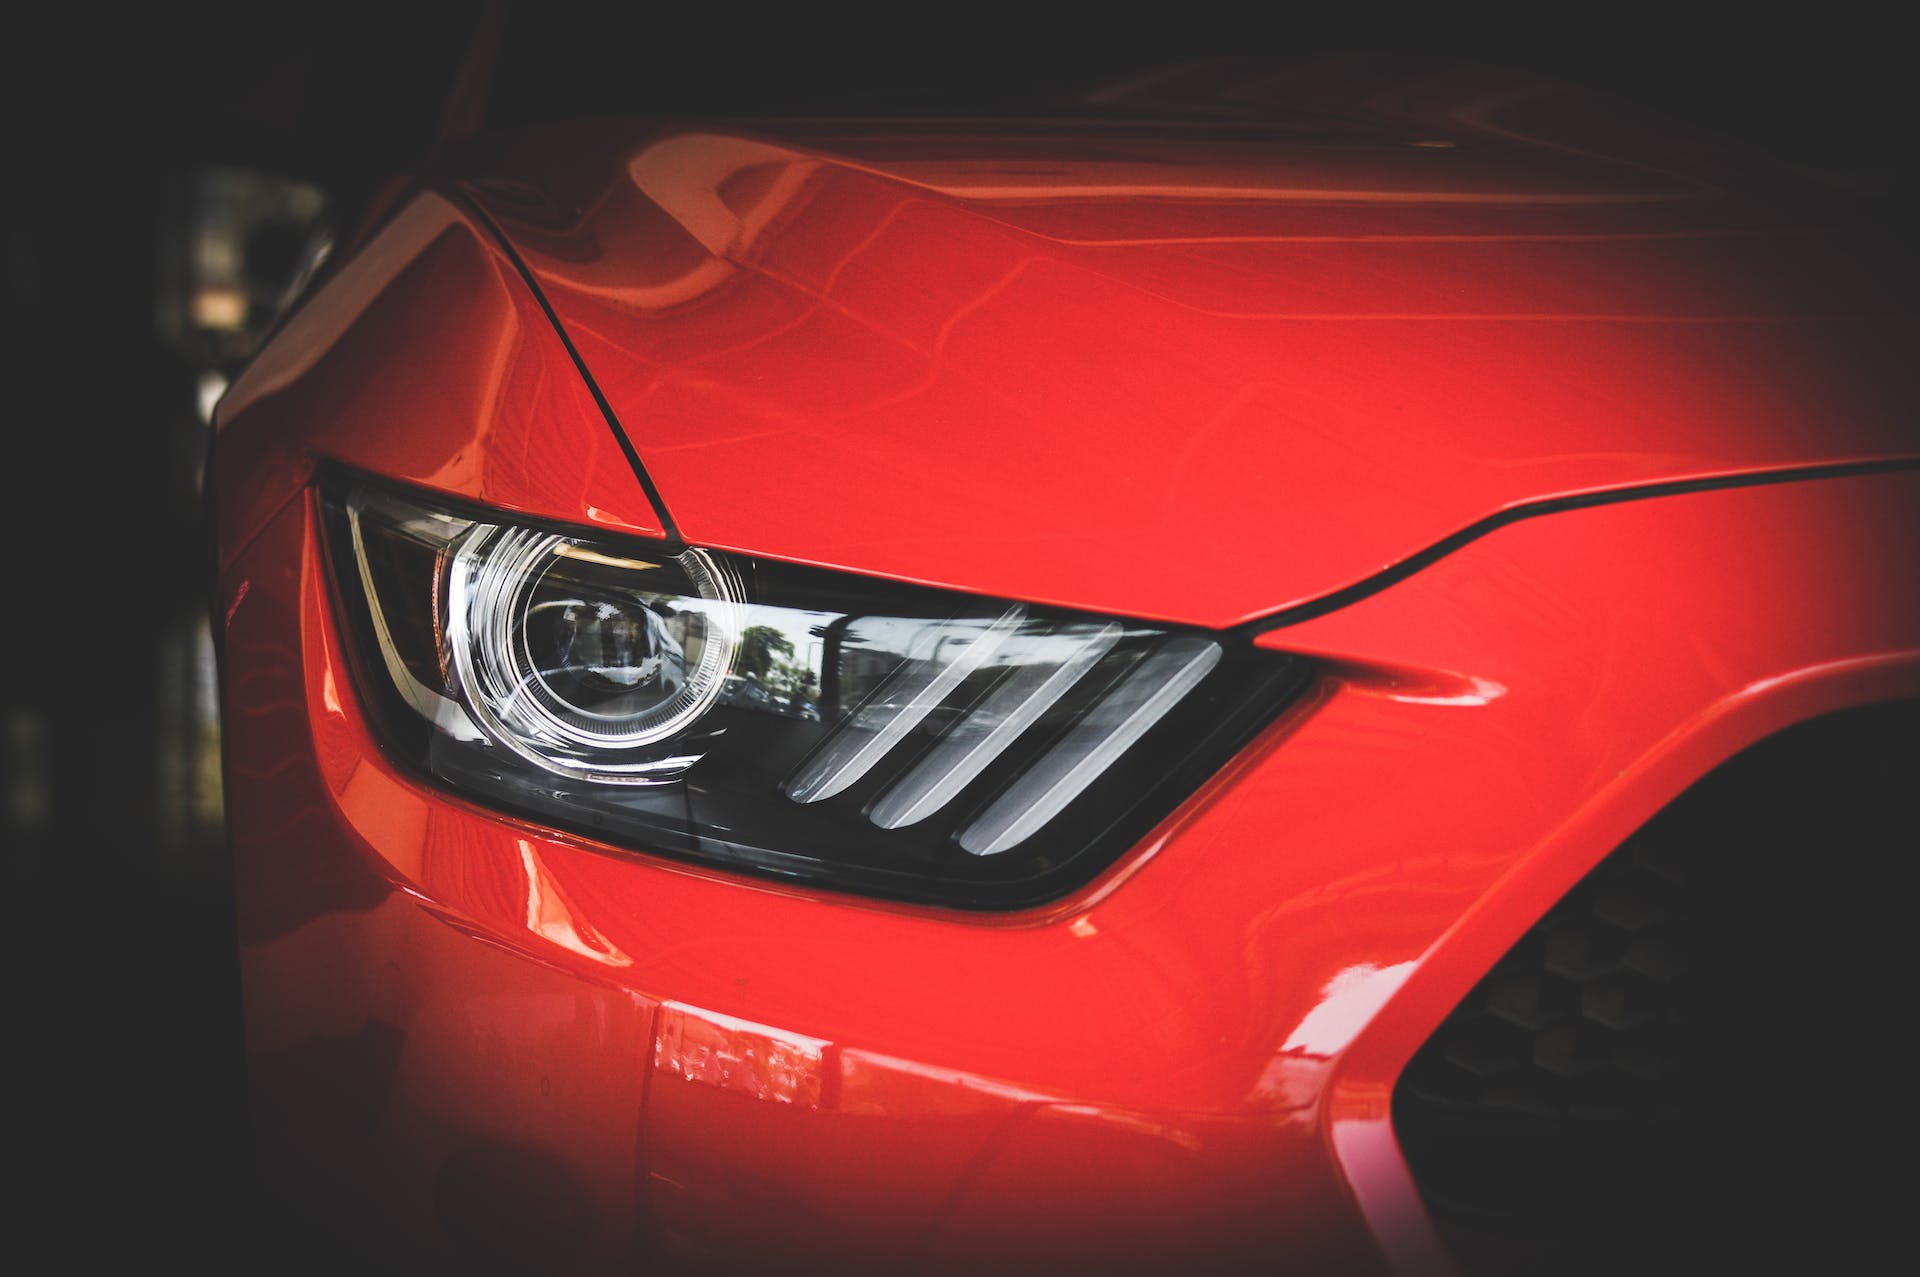 A Mustang's headlight | Source: Pexels